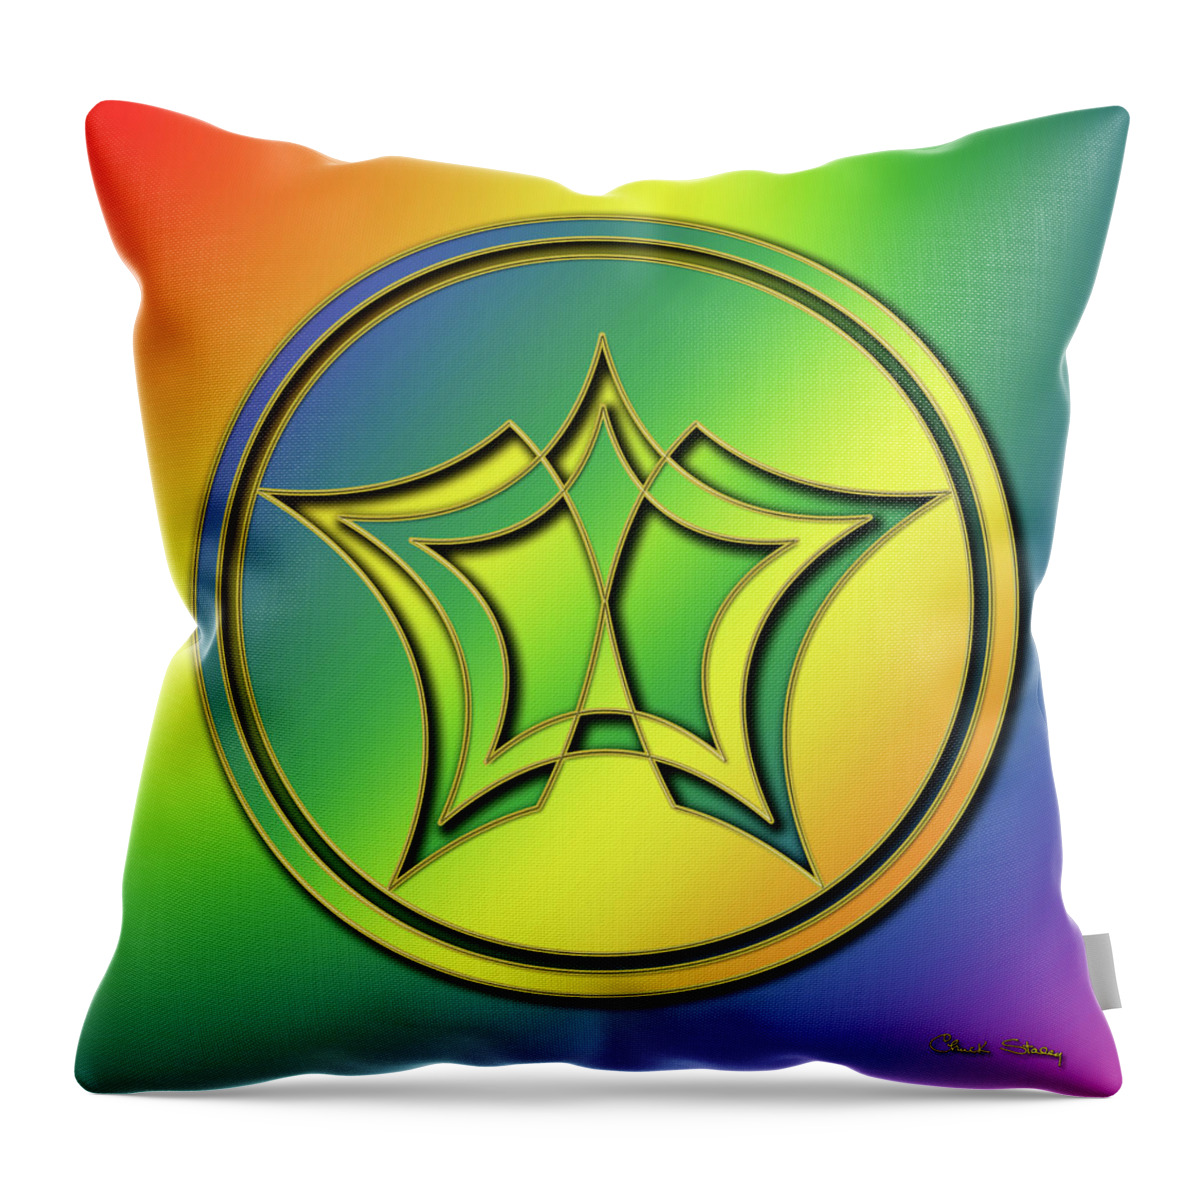 Rainbow Design 1 Throw Pillow featuring the digital art Rainbow Design 1 by Chuck Staley